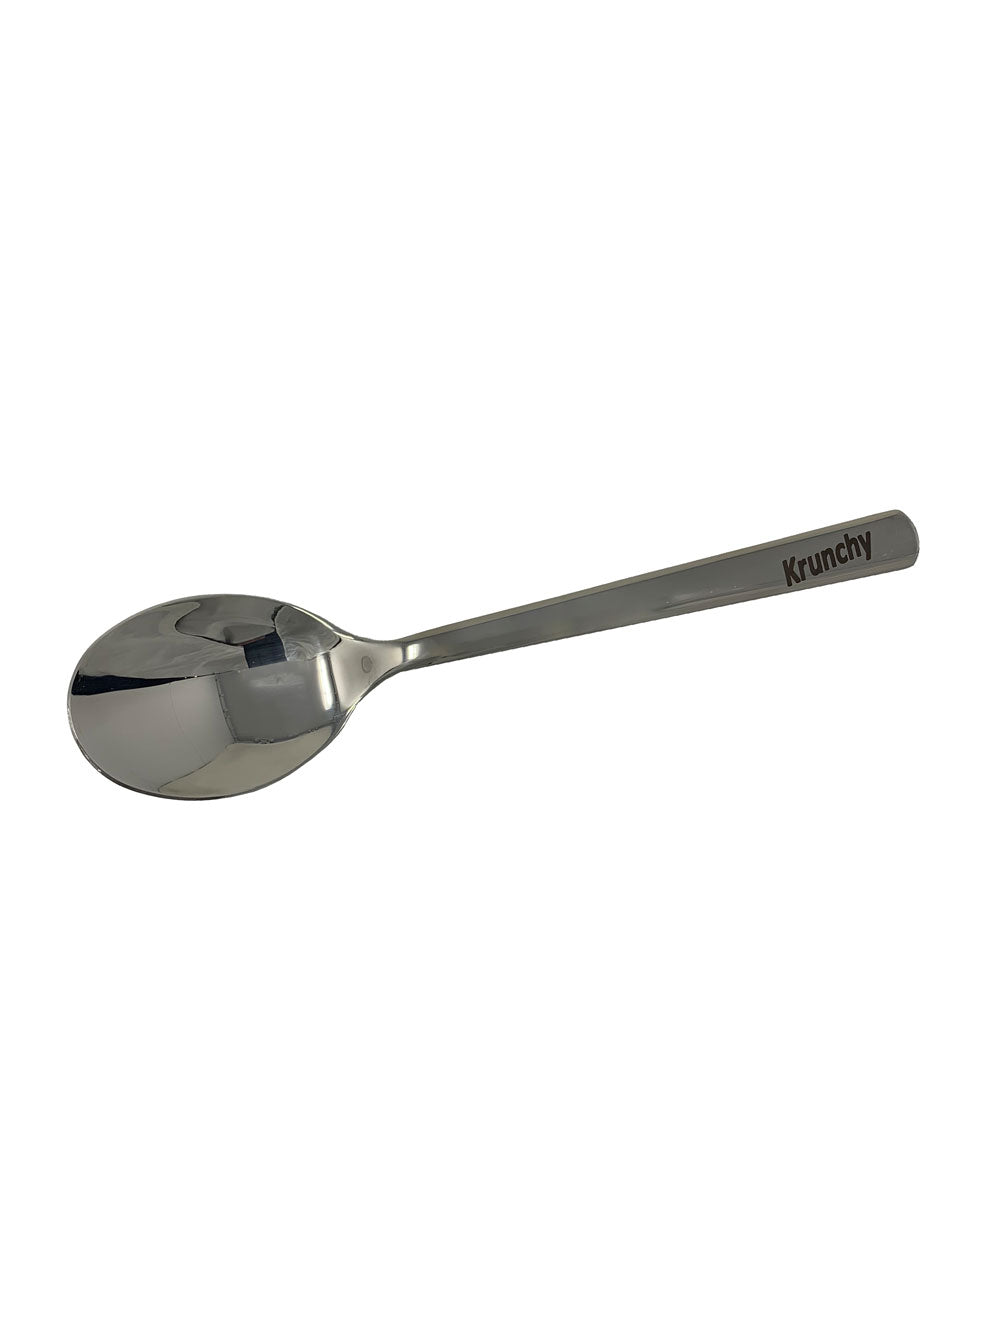 Krunchy spoon